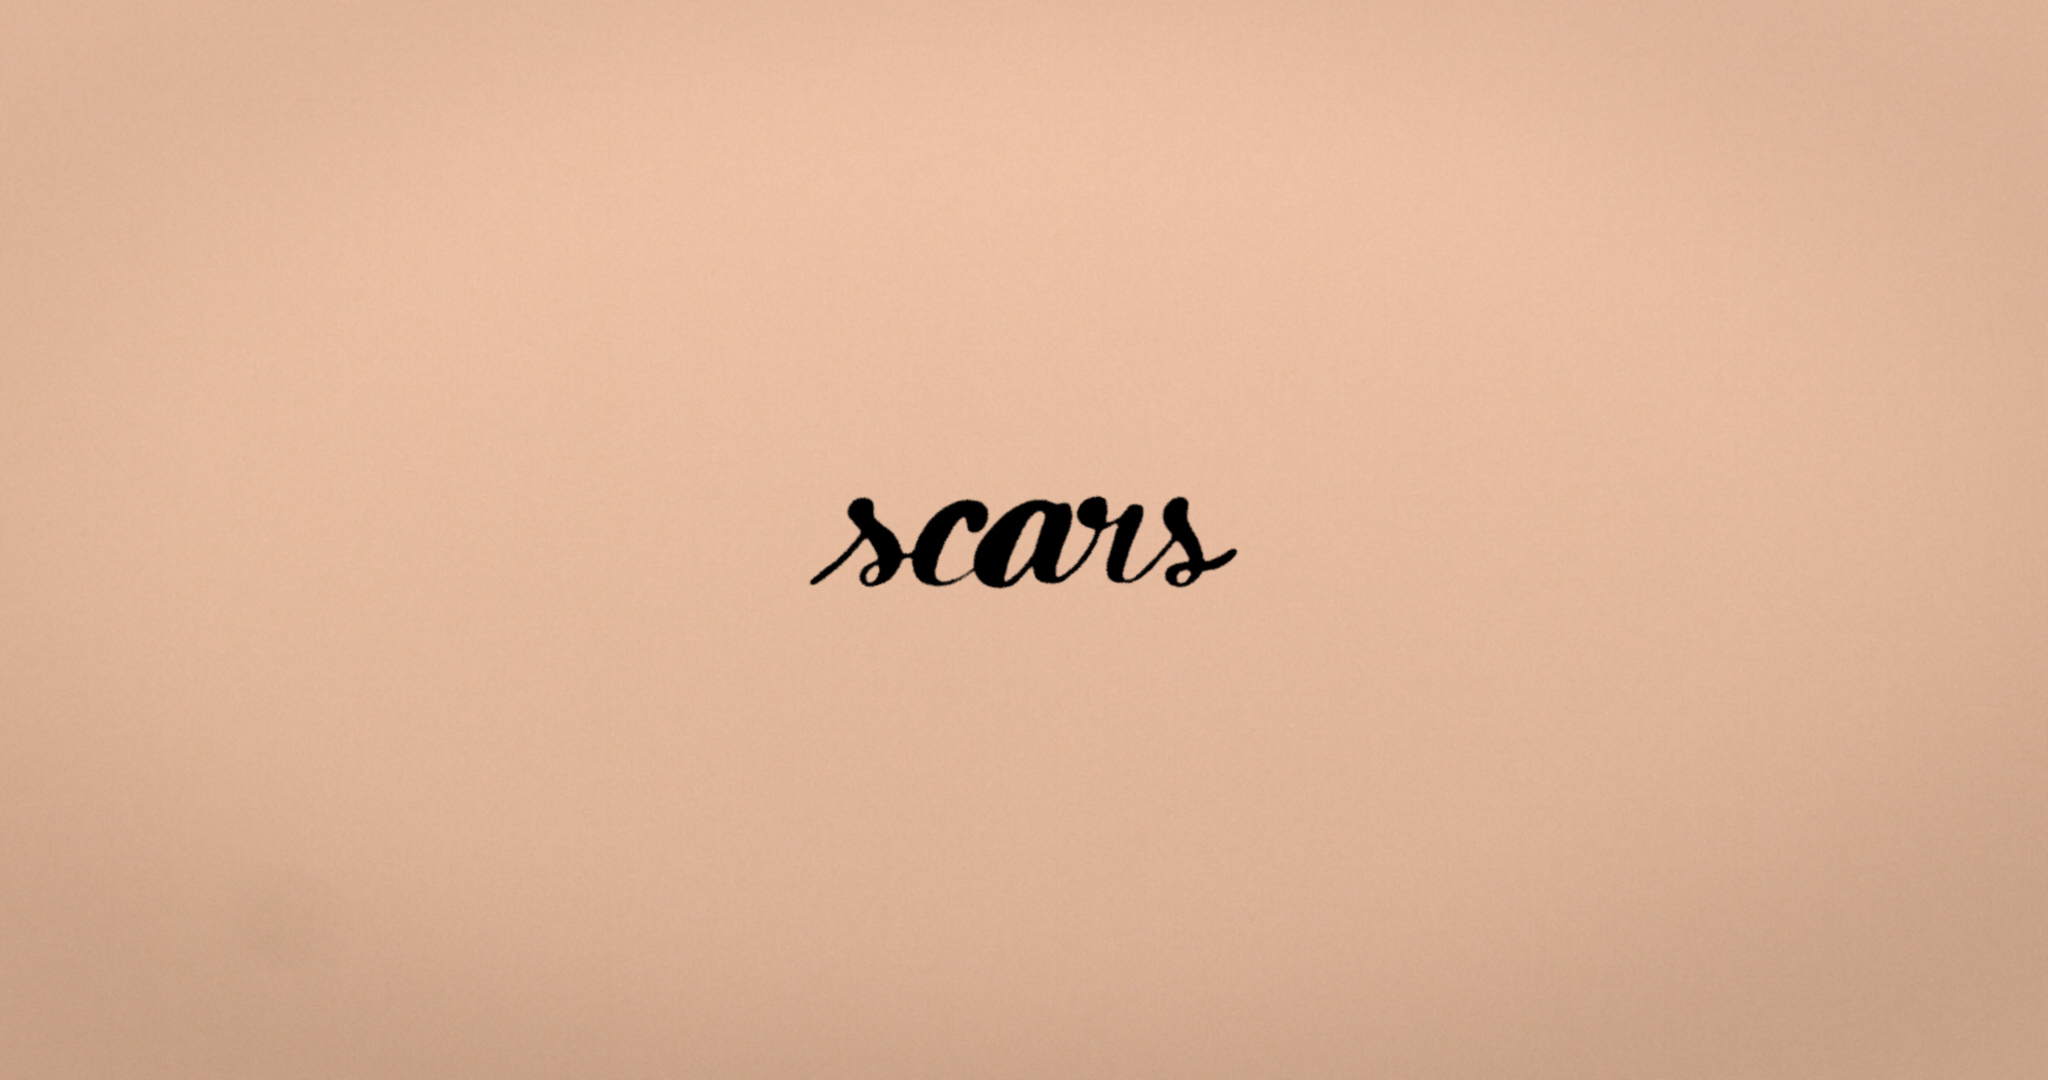 Scars - Alex Anna - 2020